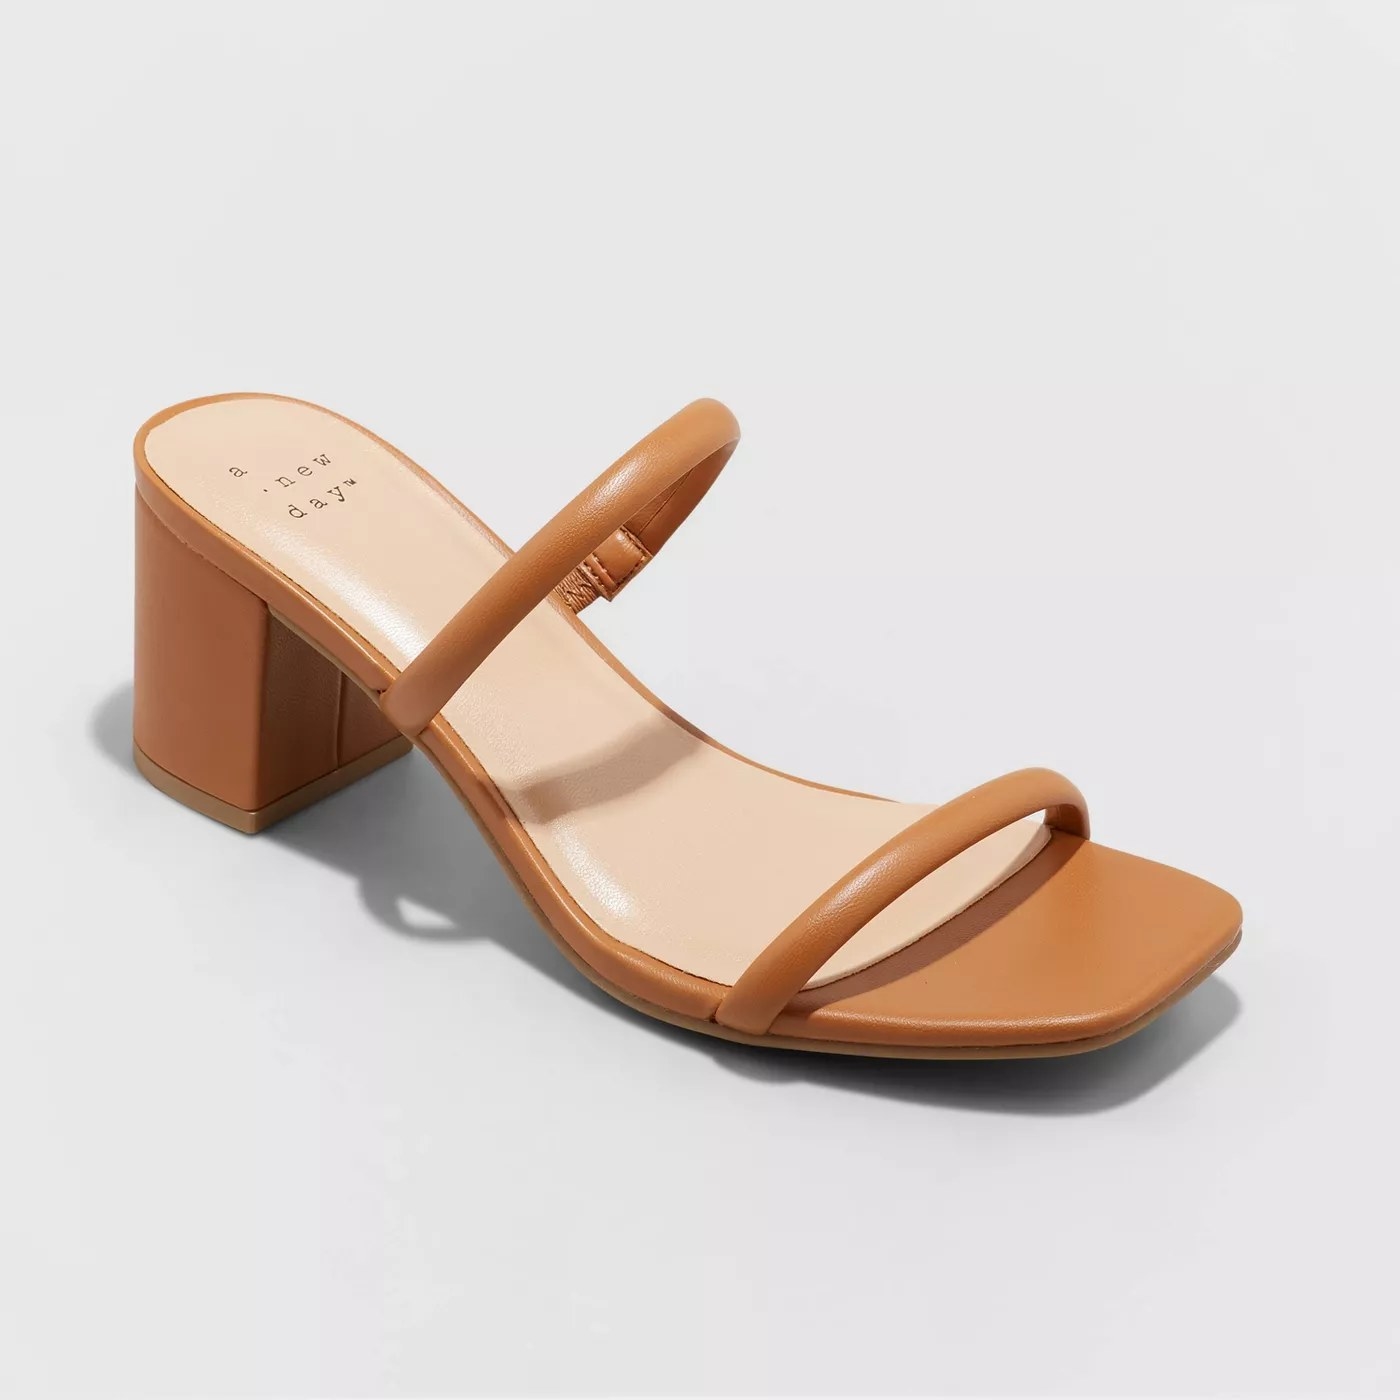 The brown heels